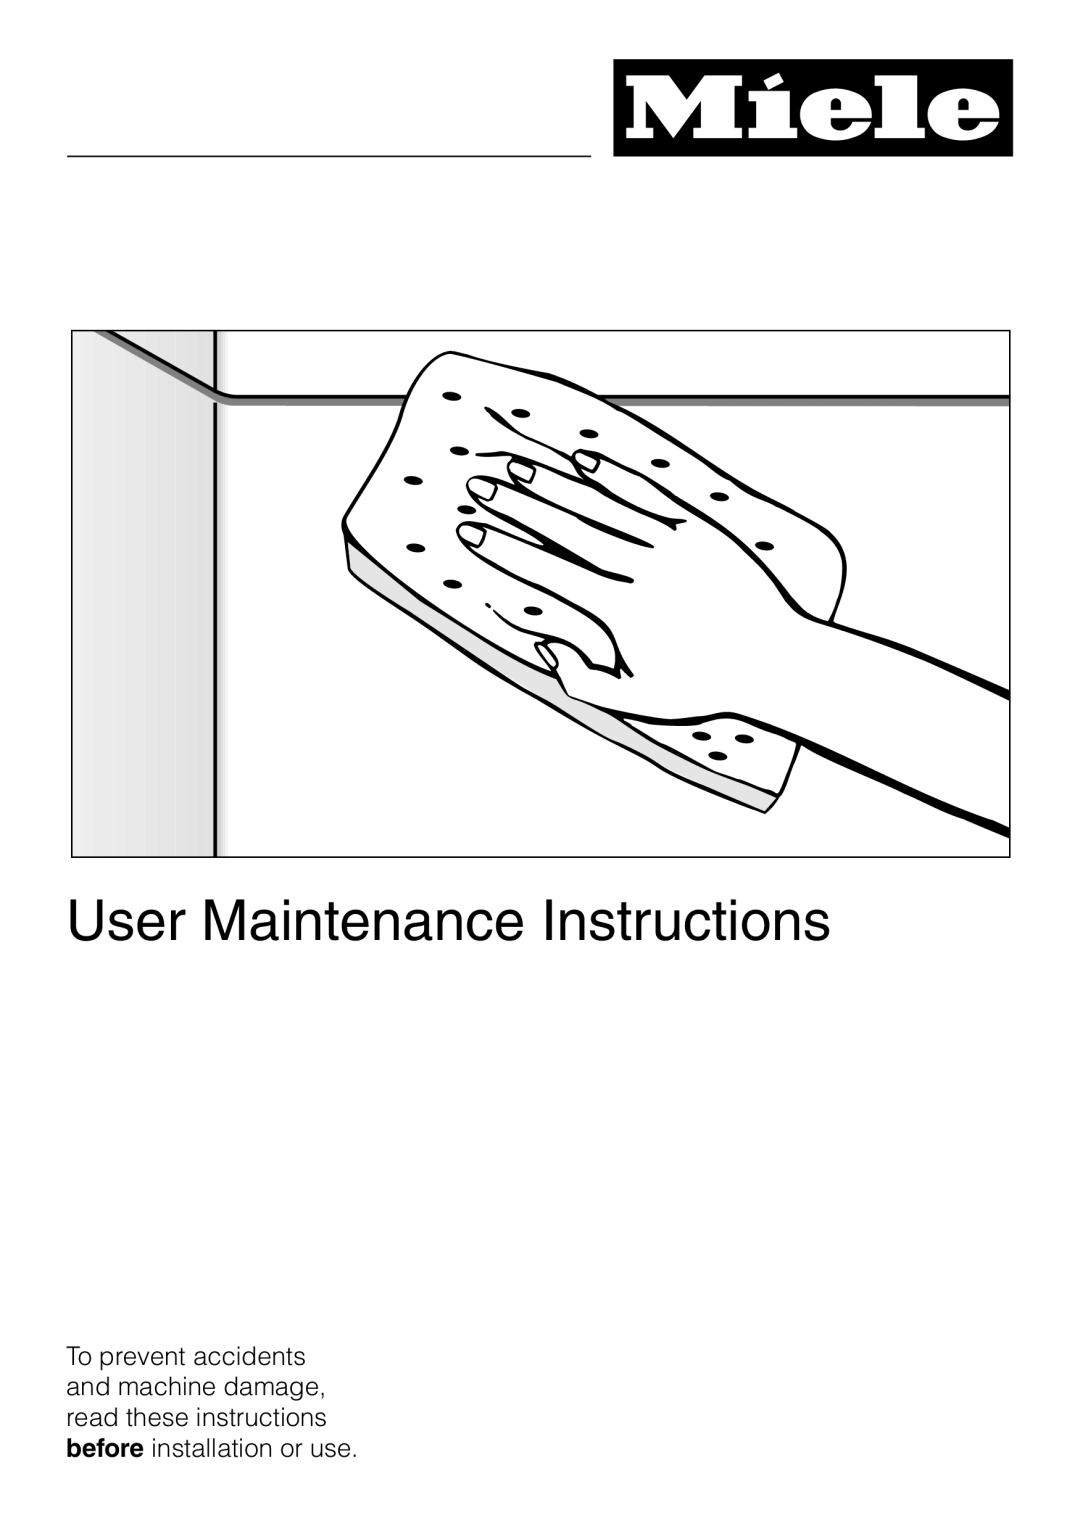 Miele G 2020 manual User Maintenance Instructions 